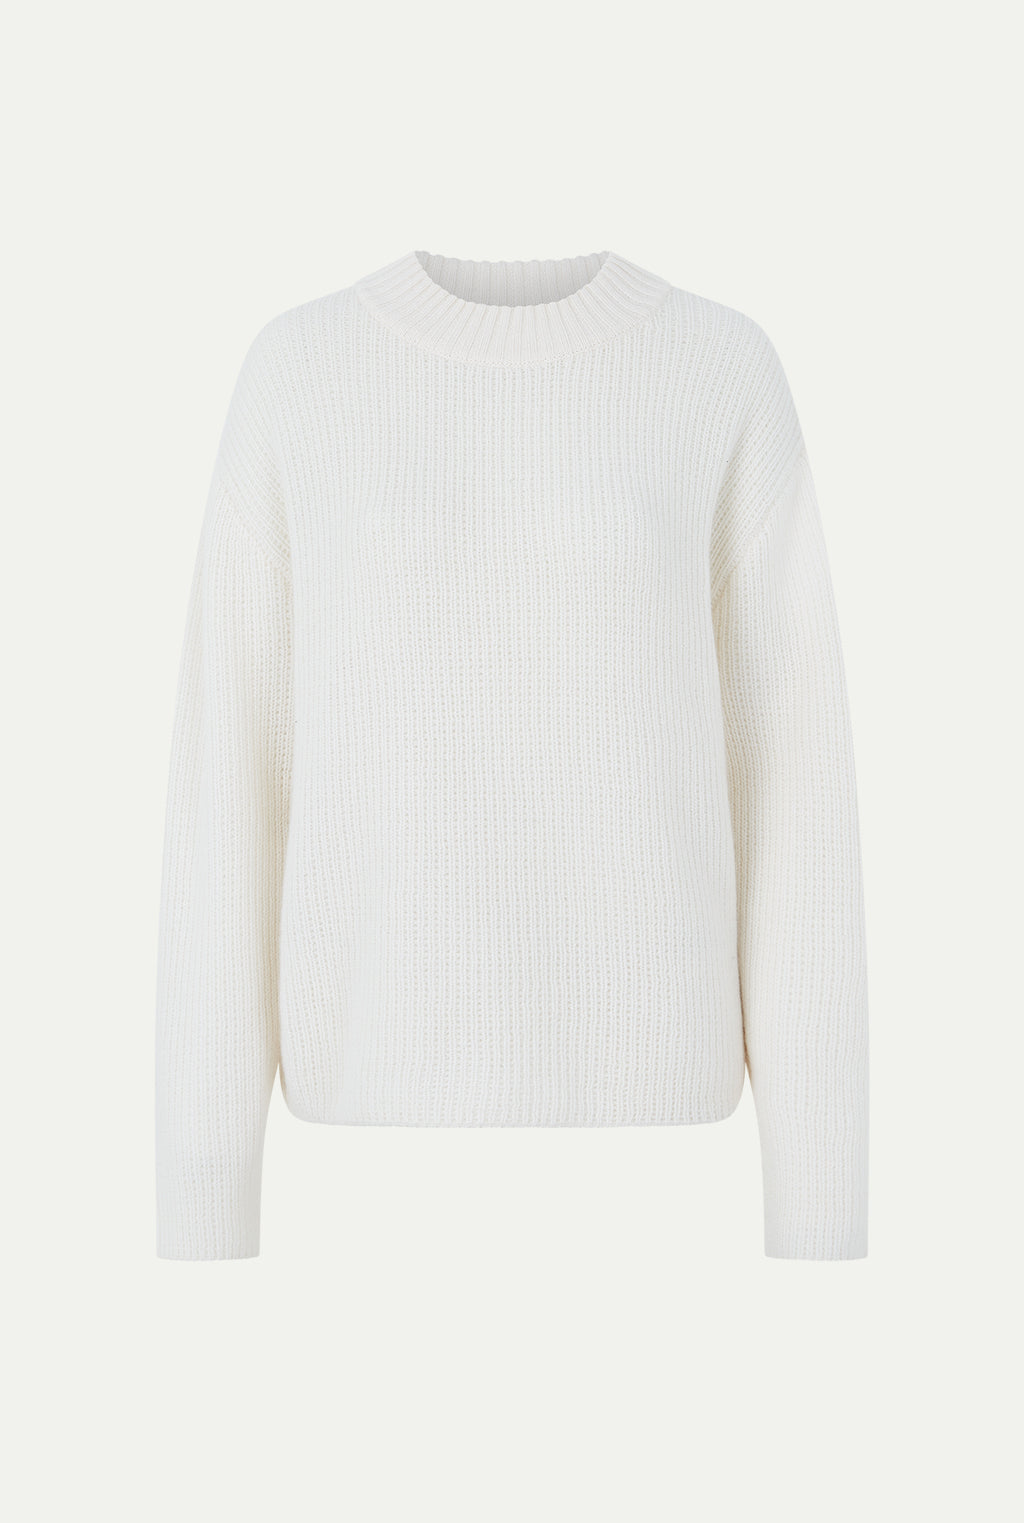 ST MALO cashmere sweater